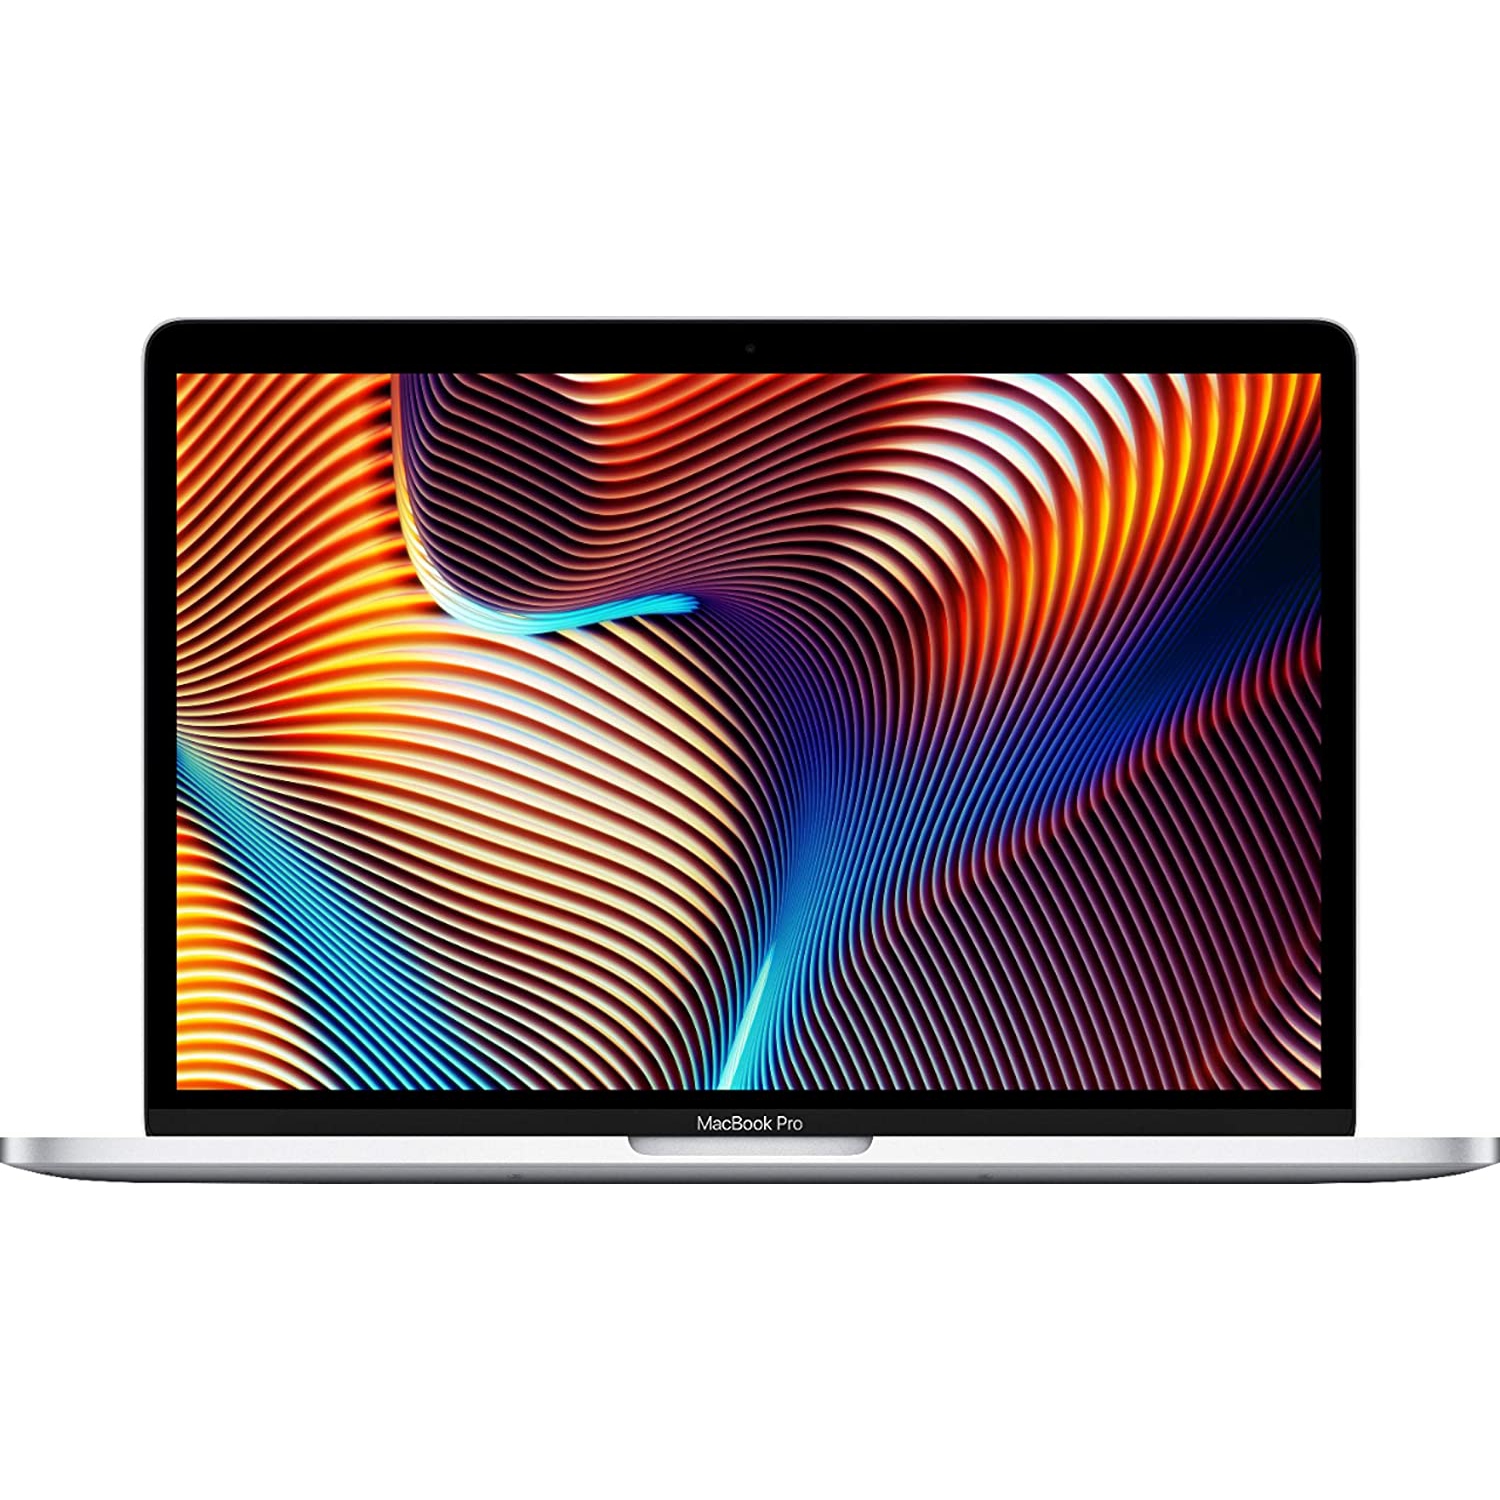 Refurbished (Excellent) - Apple MacBook Pro 13.3" i7 16GB 256GB SSD - US QWERTY Keyboard - Mv962ll/a 2019 Silver